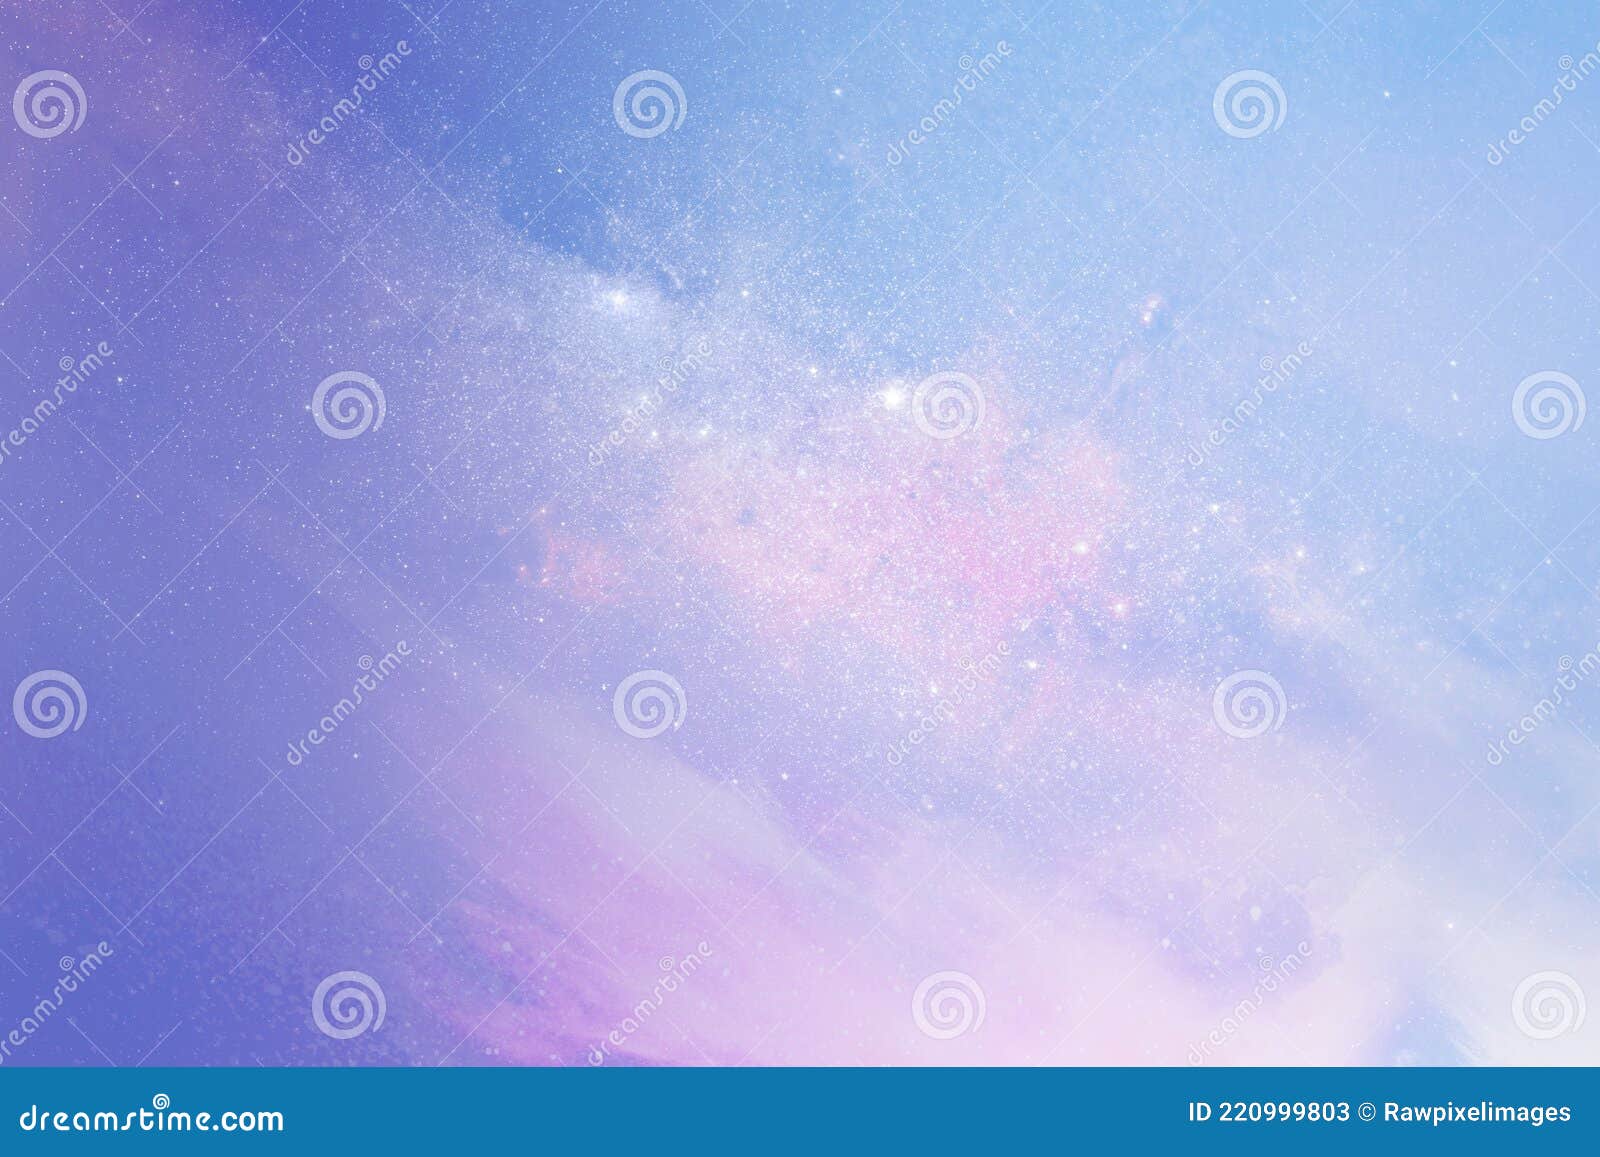 sparkle  Galaxy wallpaper iphone Pastel galaxy Galaxy wallpaper